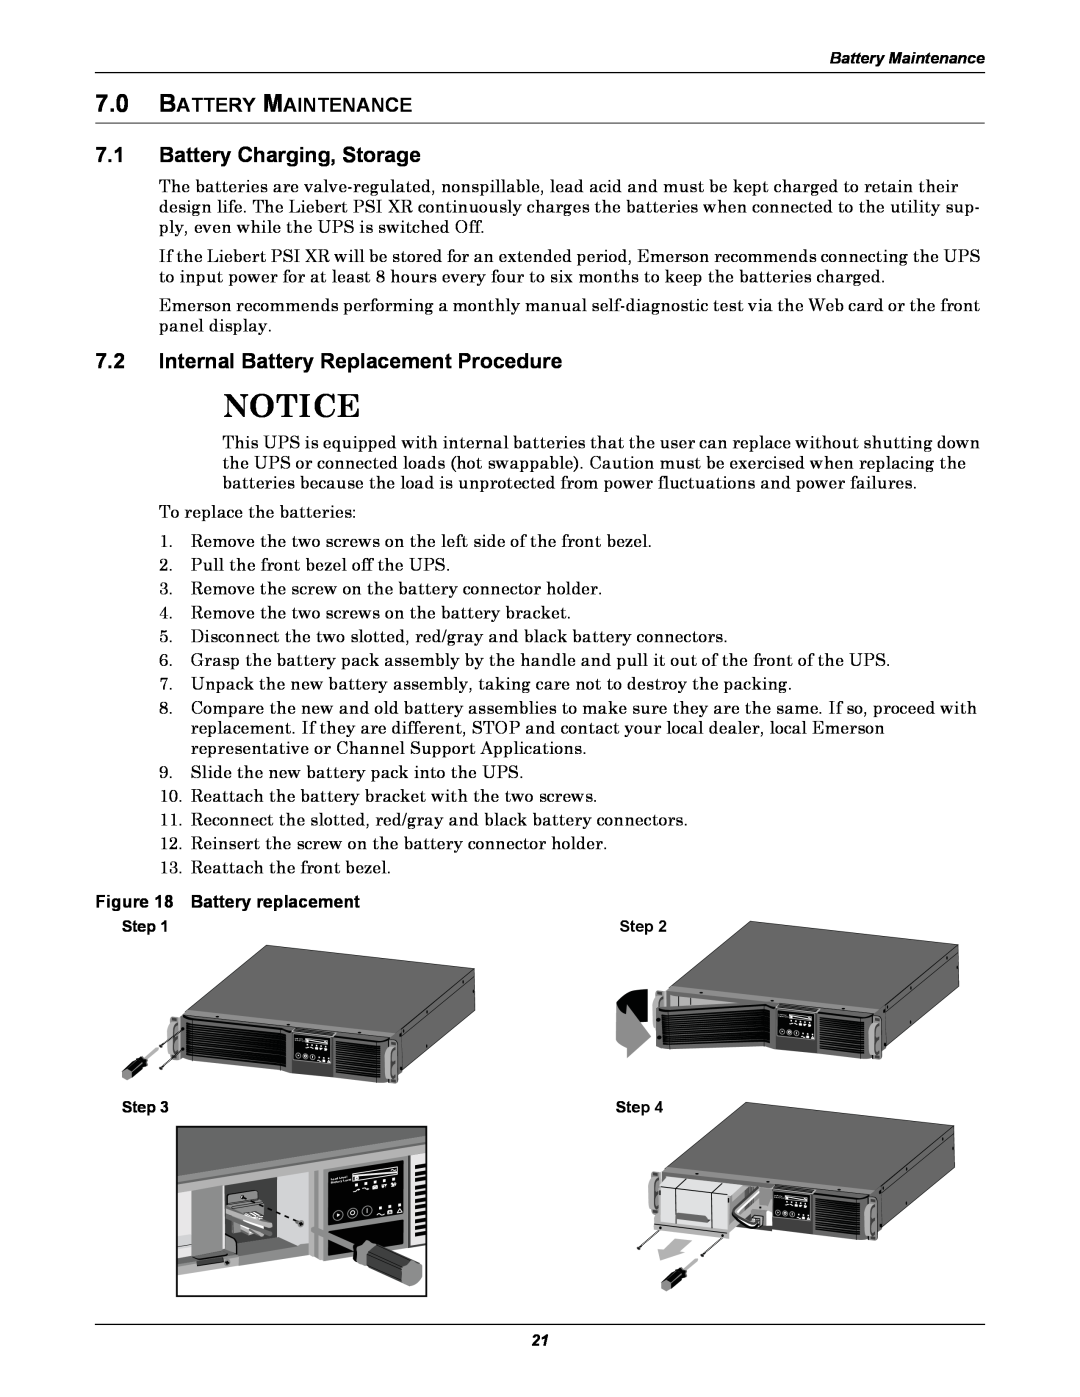 Emerson 1500, 3000 Notice, 7.1Battery Charging, Storage, 7.2Internal Battery Replacement Procedure, 7.0BATTERY MAINTENANCE 